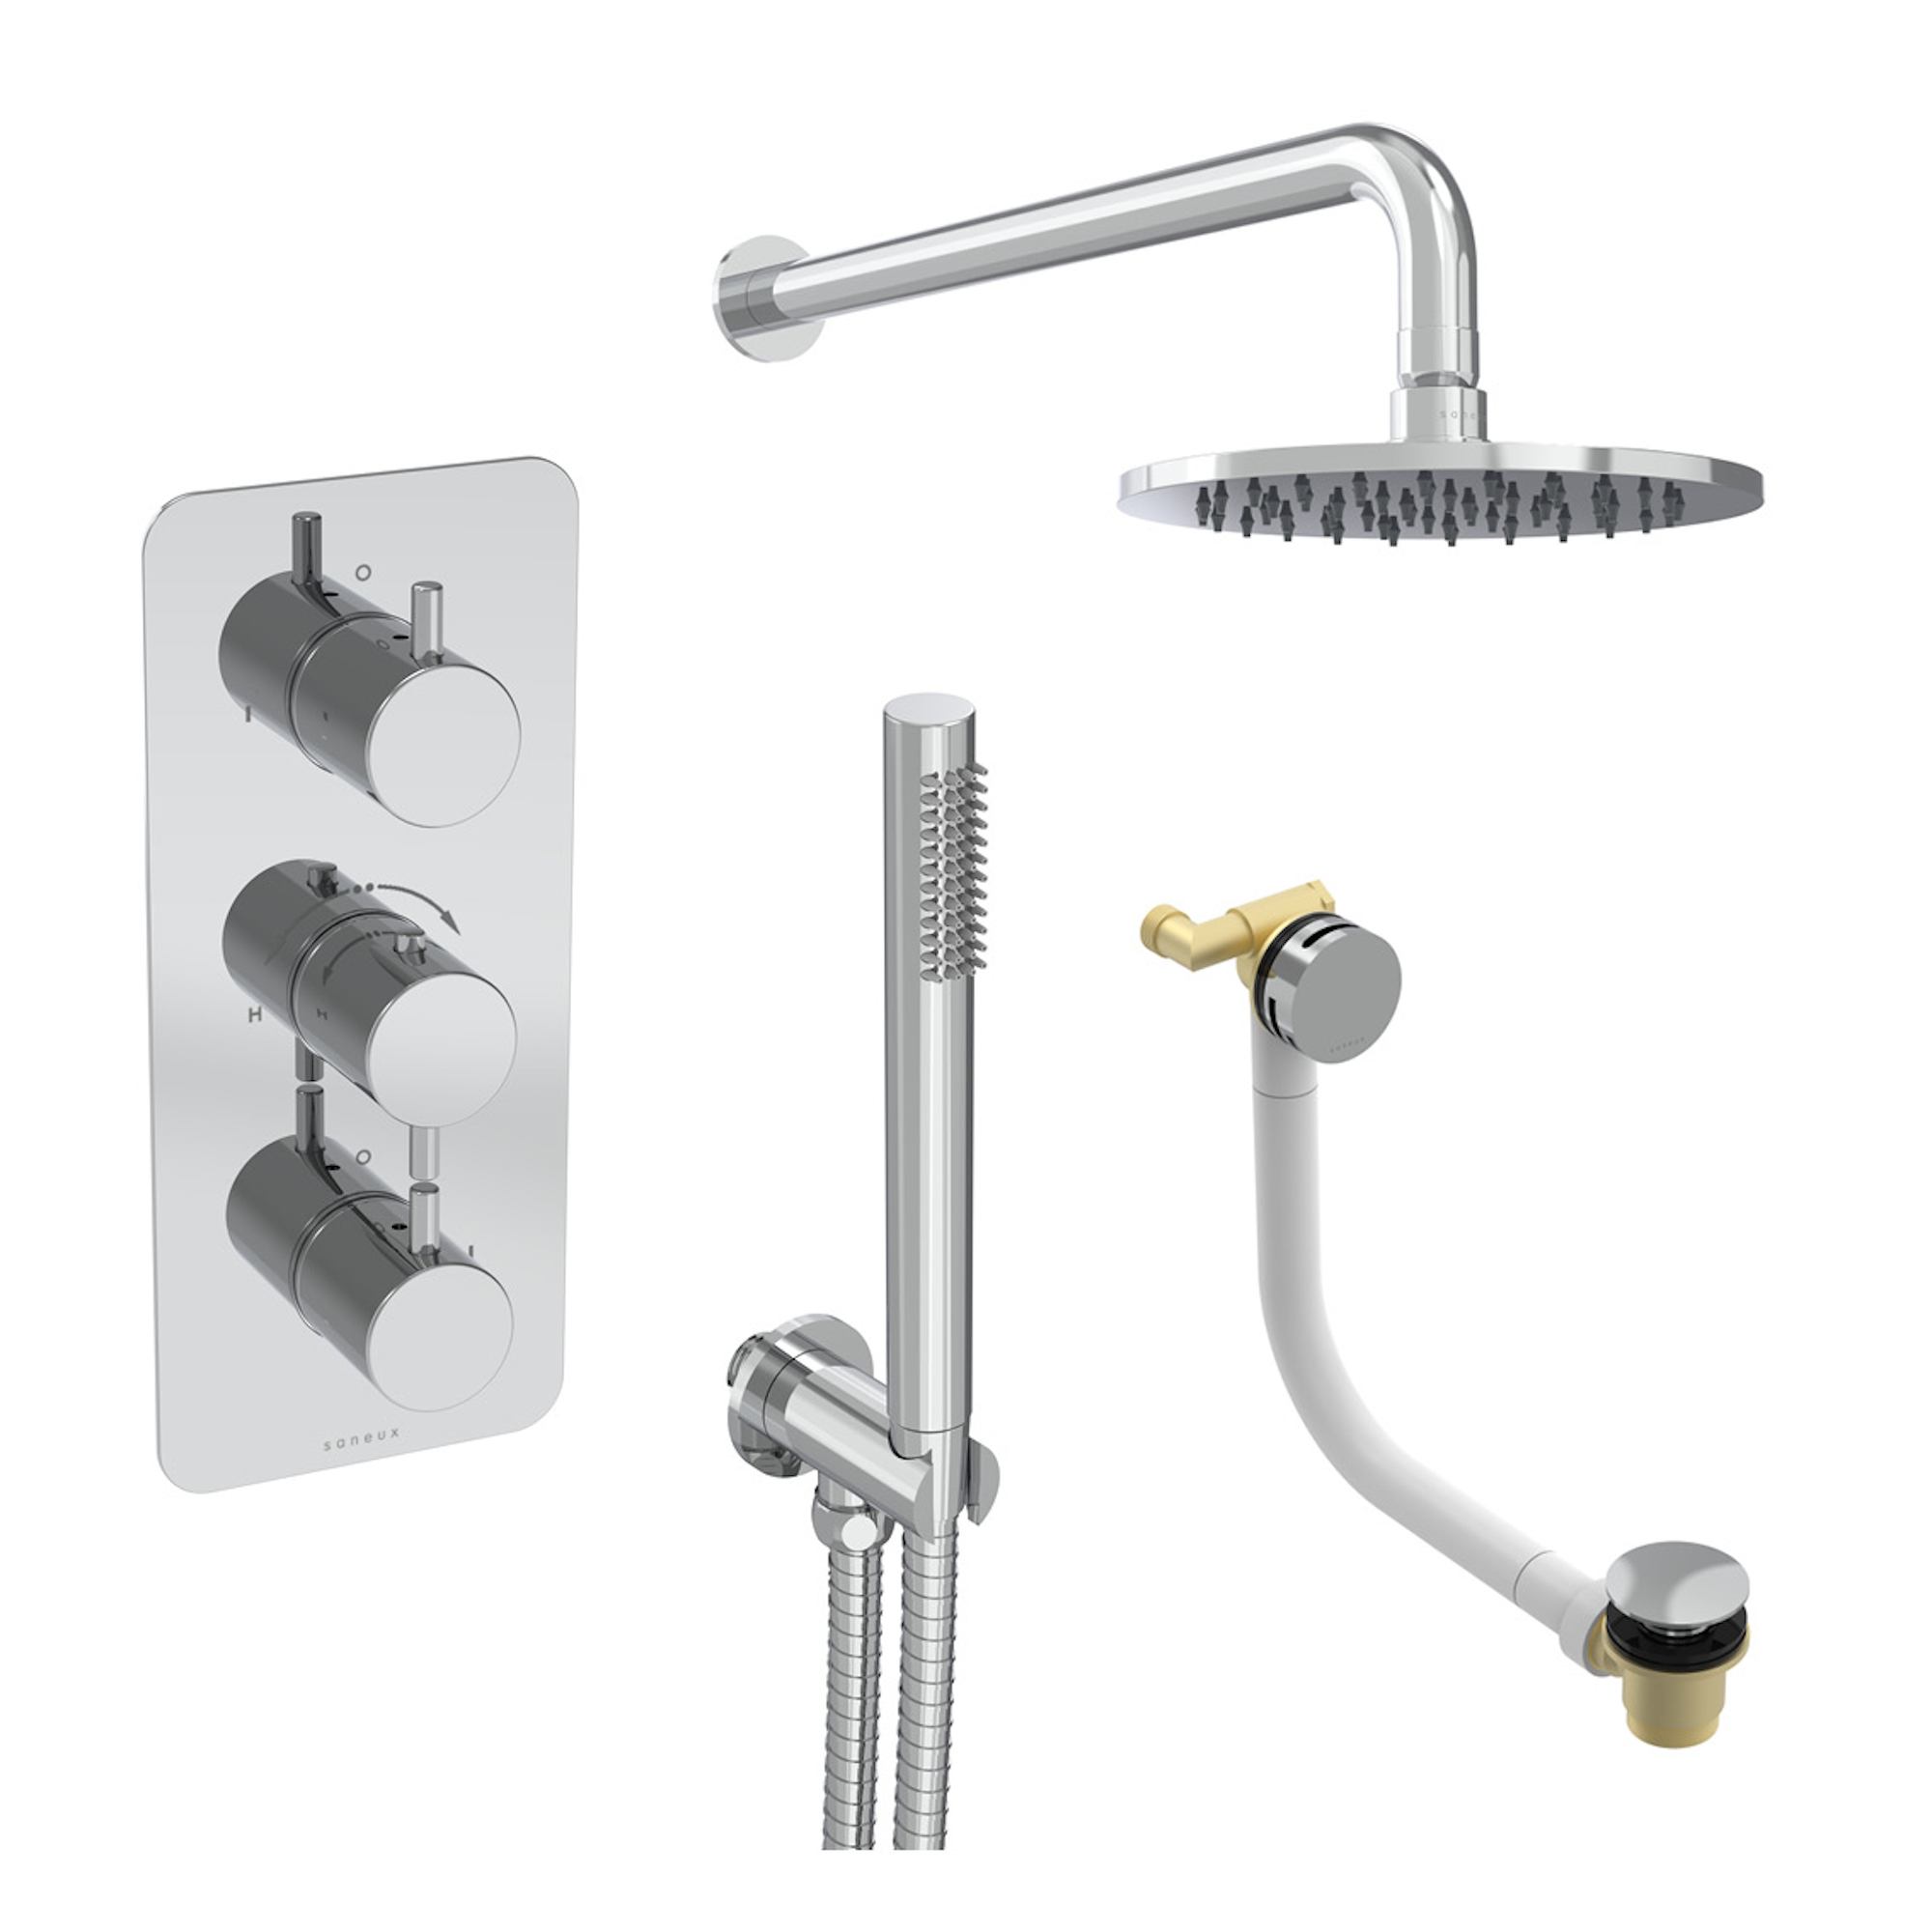 COS 3 way shower kit - w/ Slim handset & Bath filler & Shower head - Chrome